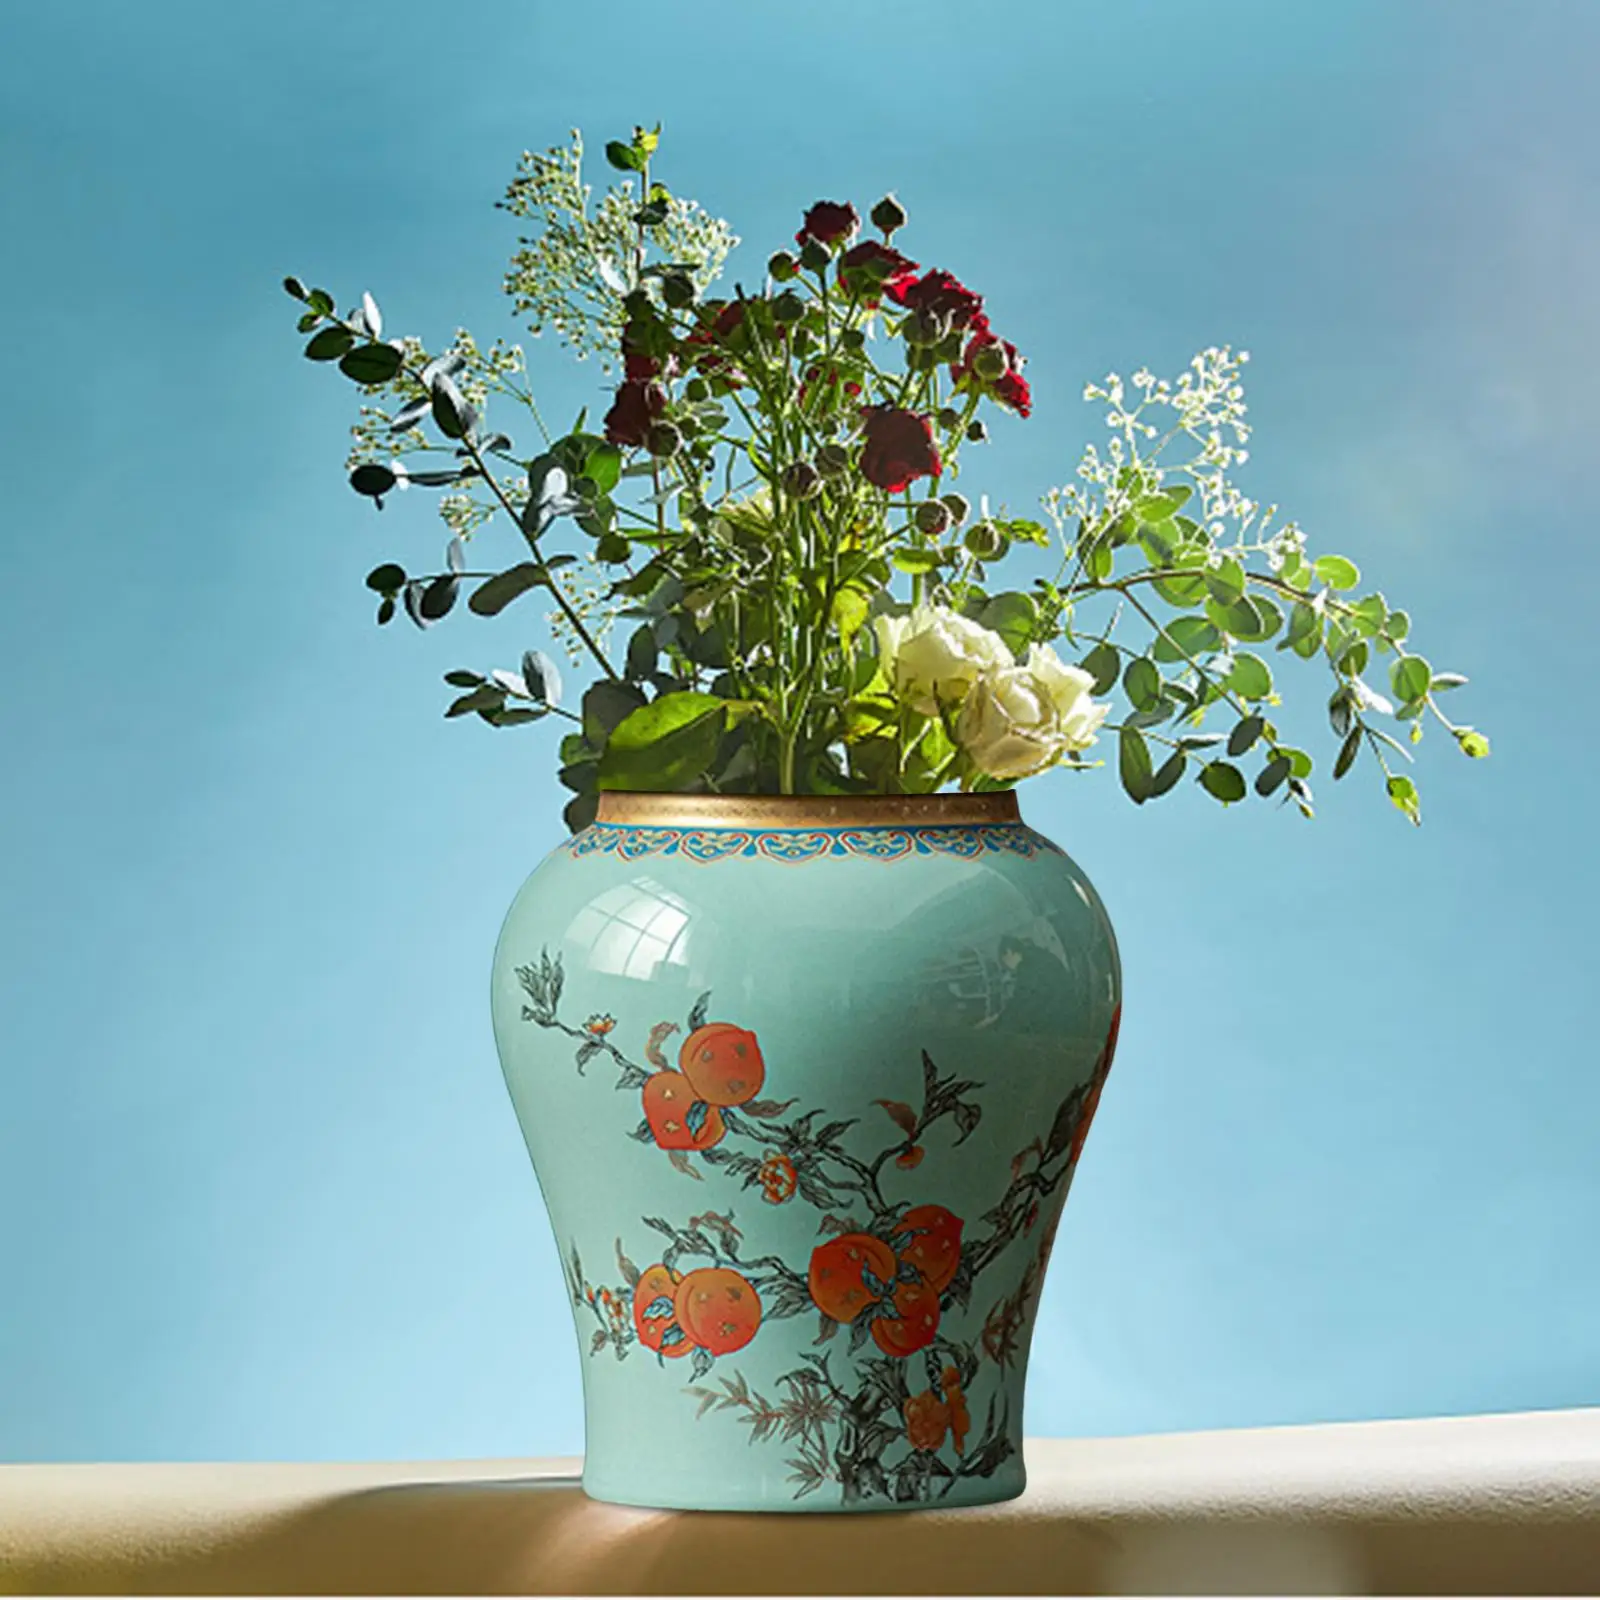 Ceramic Ginger Jar Tea Storage Jar Chinese Style for Living Room Decor